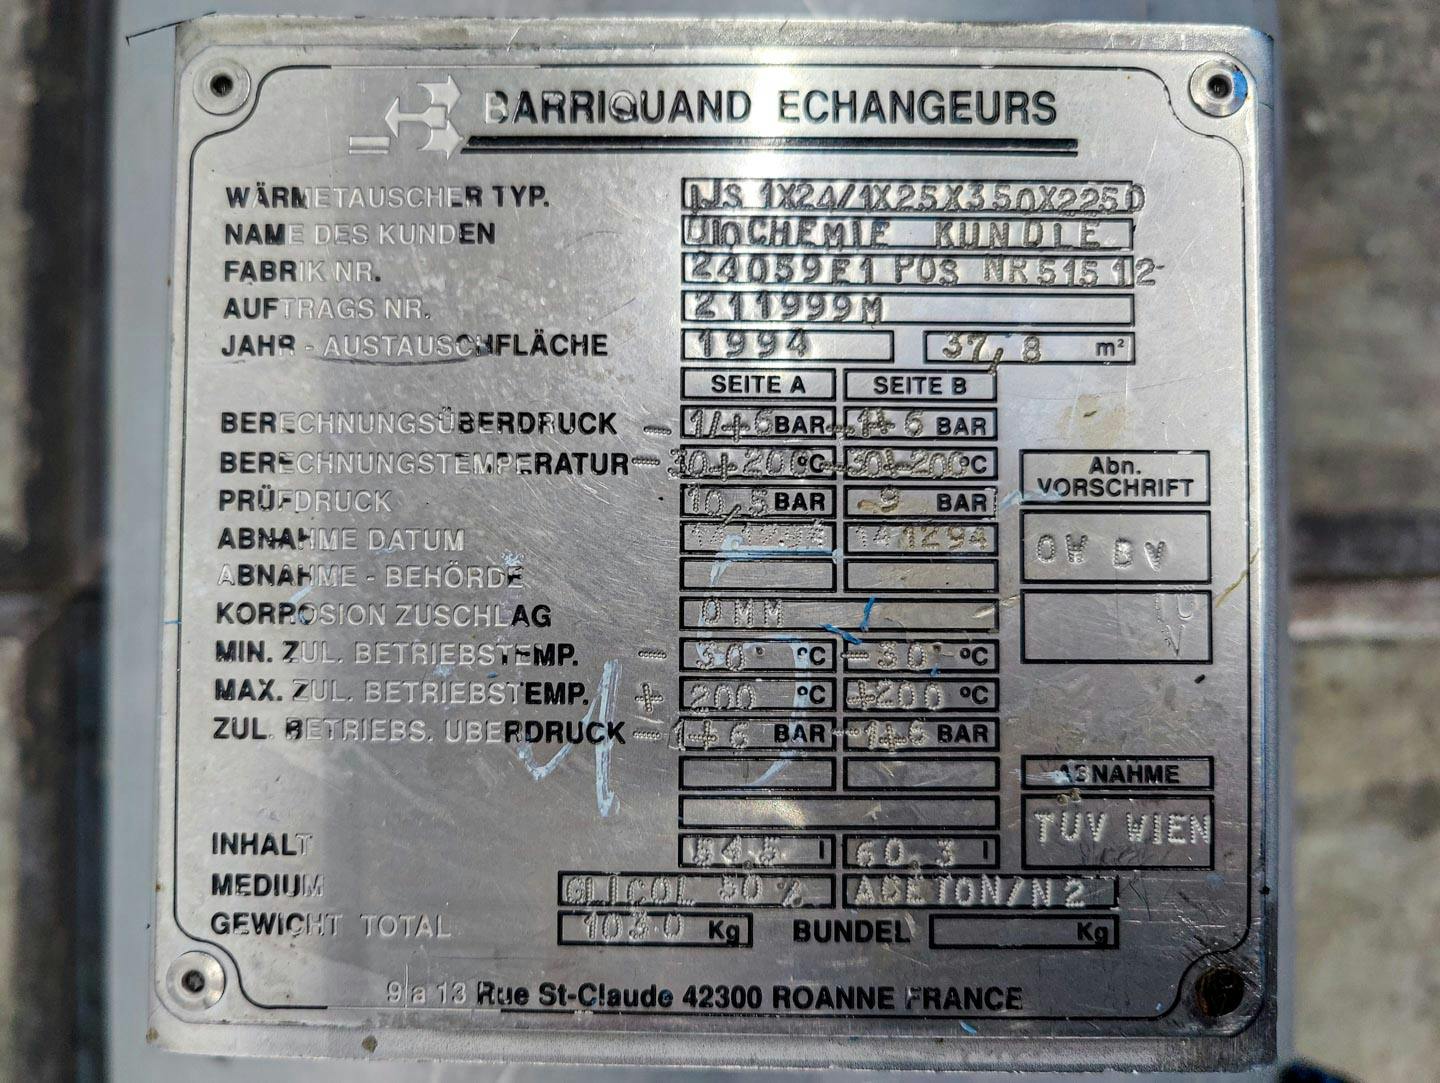 Barriquand IJS 1x24/1x25x350x2250 - 37,8 m² - Plate heat exchanger - image 6